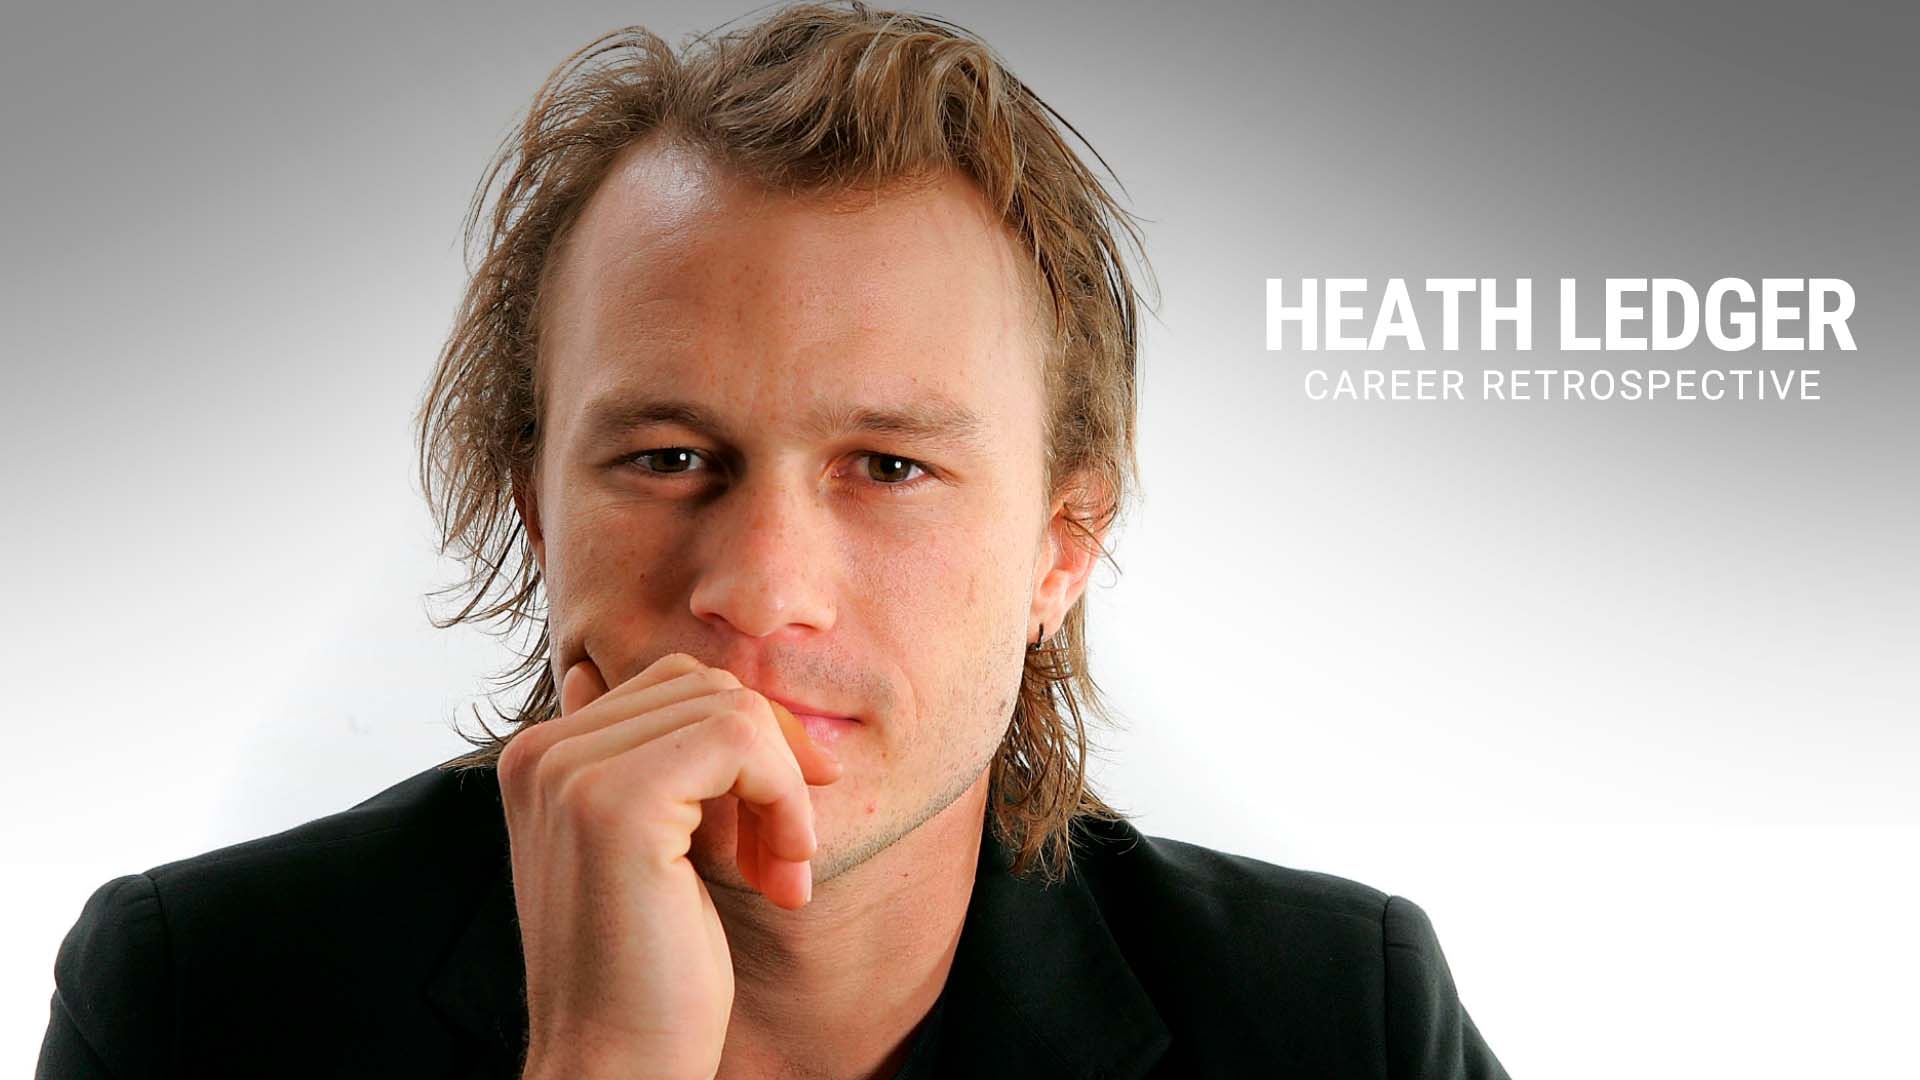 Heath Ledger’s Death Leaves Big Legal Question